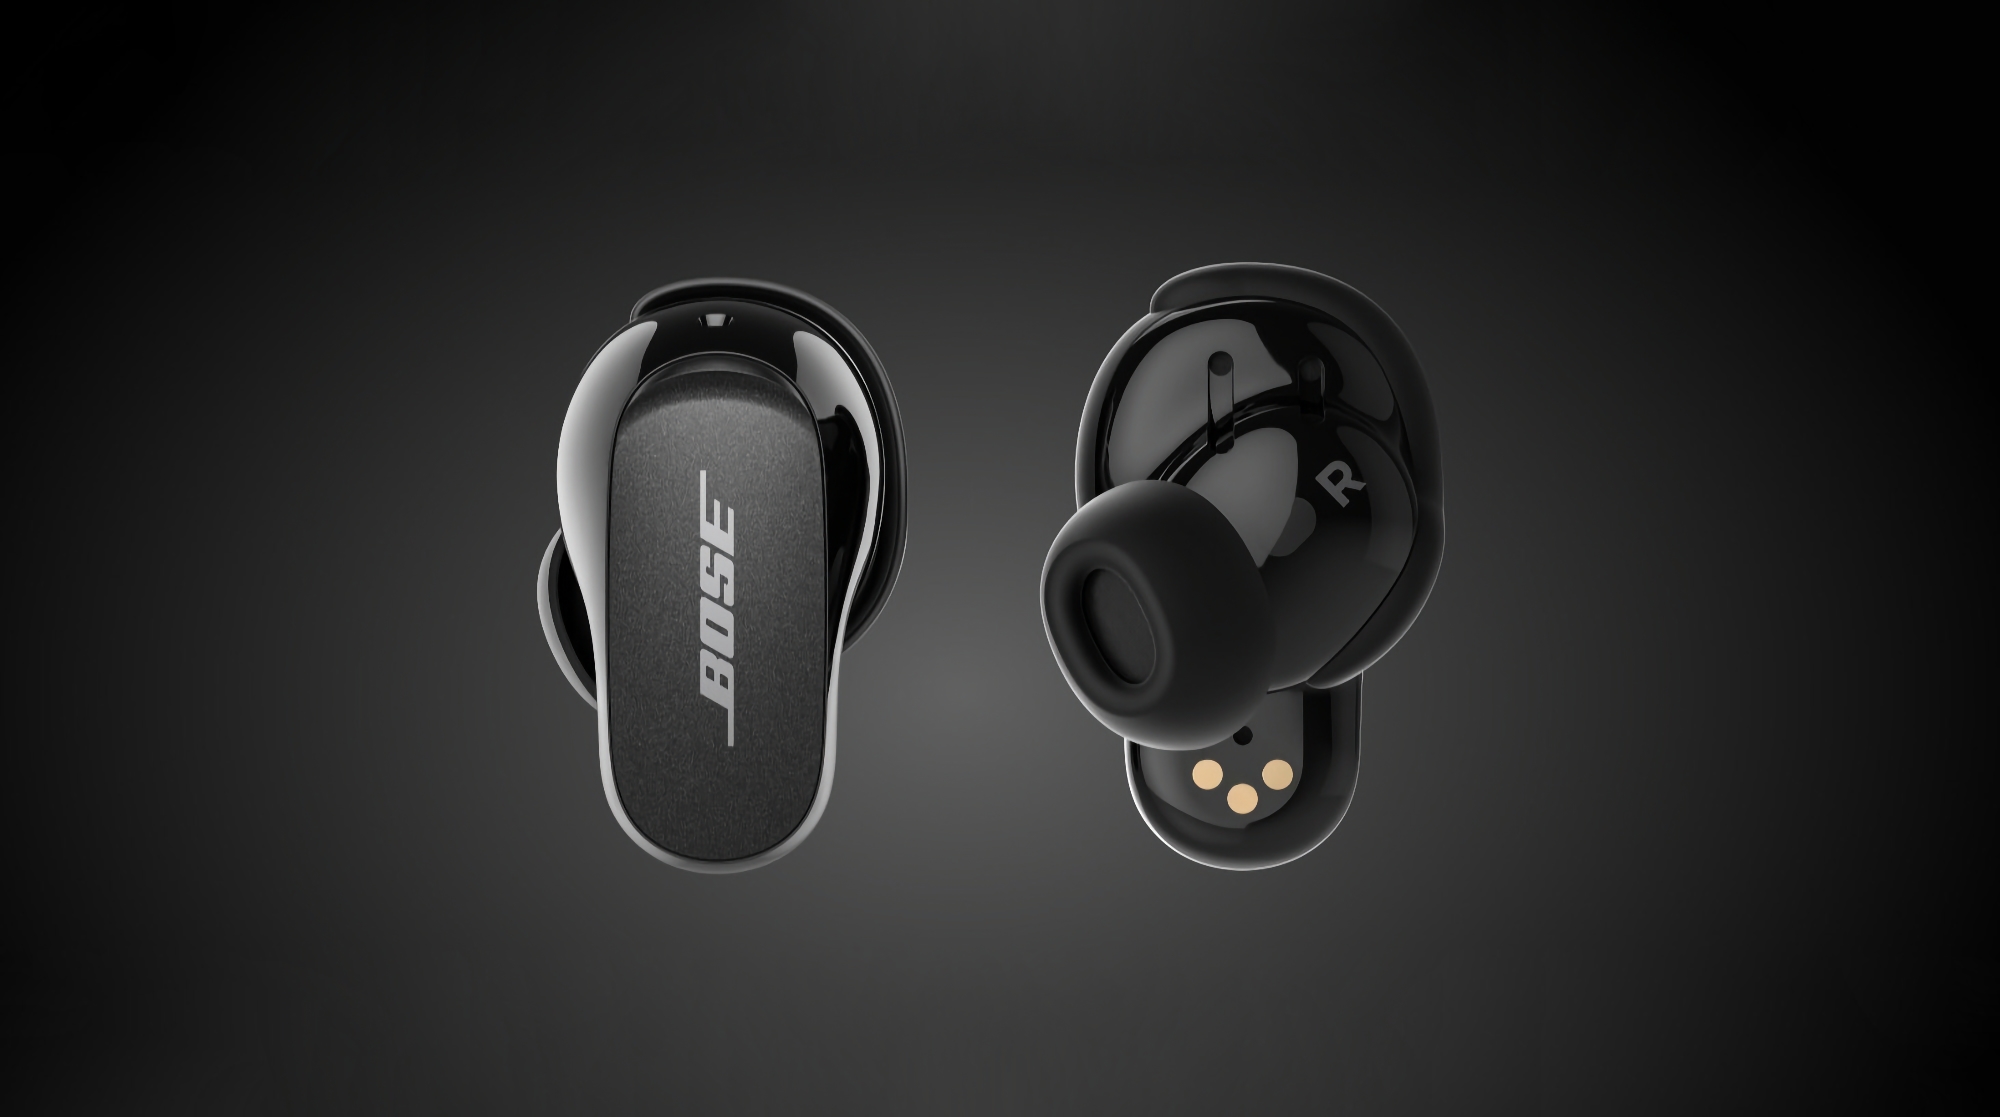 Premium headphones: Bose QuietComfort Earbuds II are available on